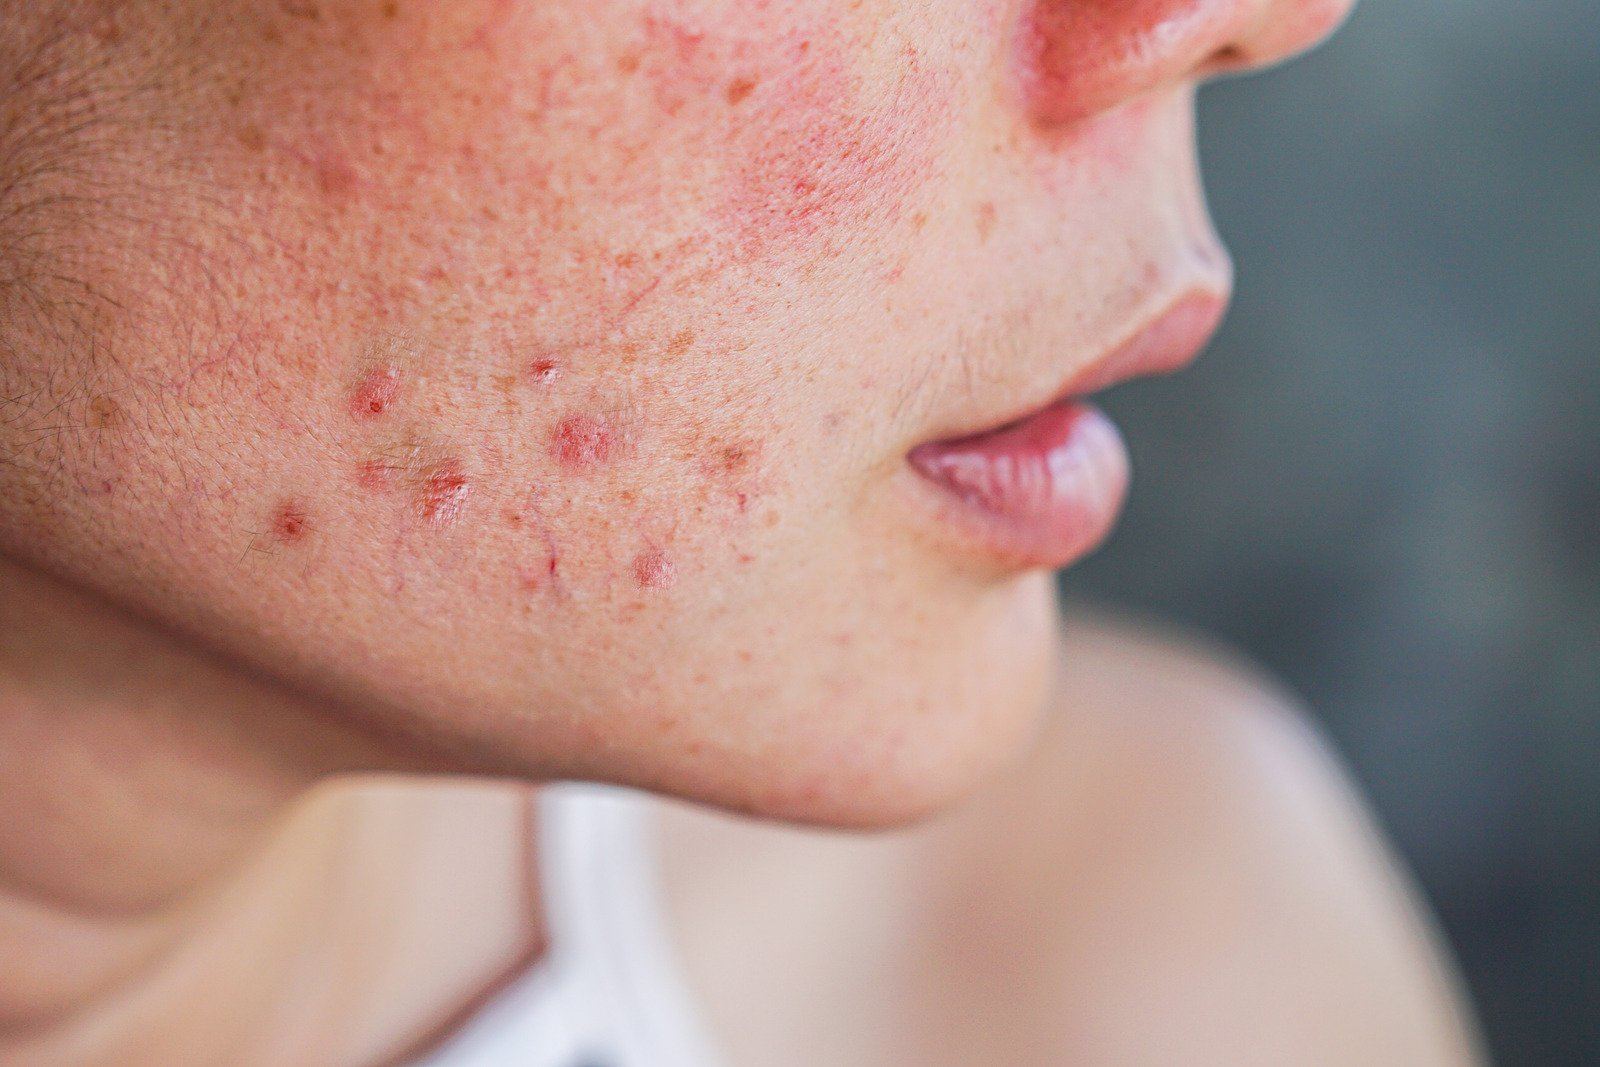 severe recalcitrant nodular acne